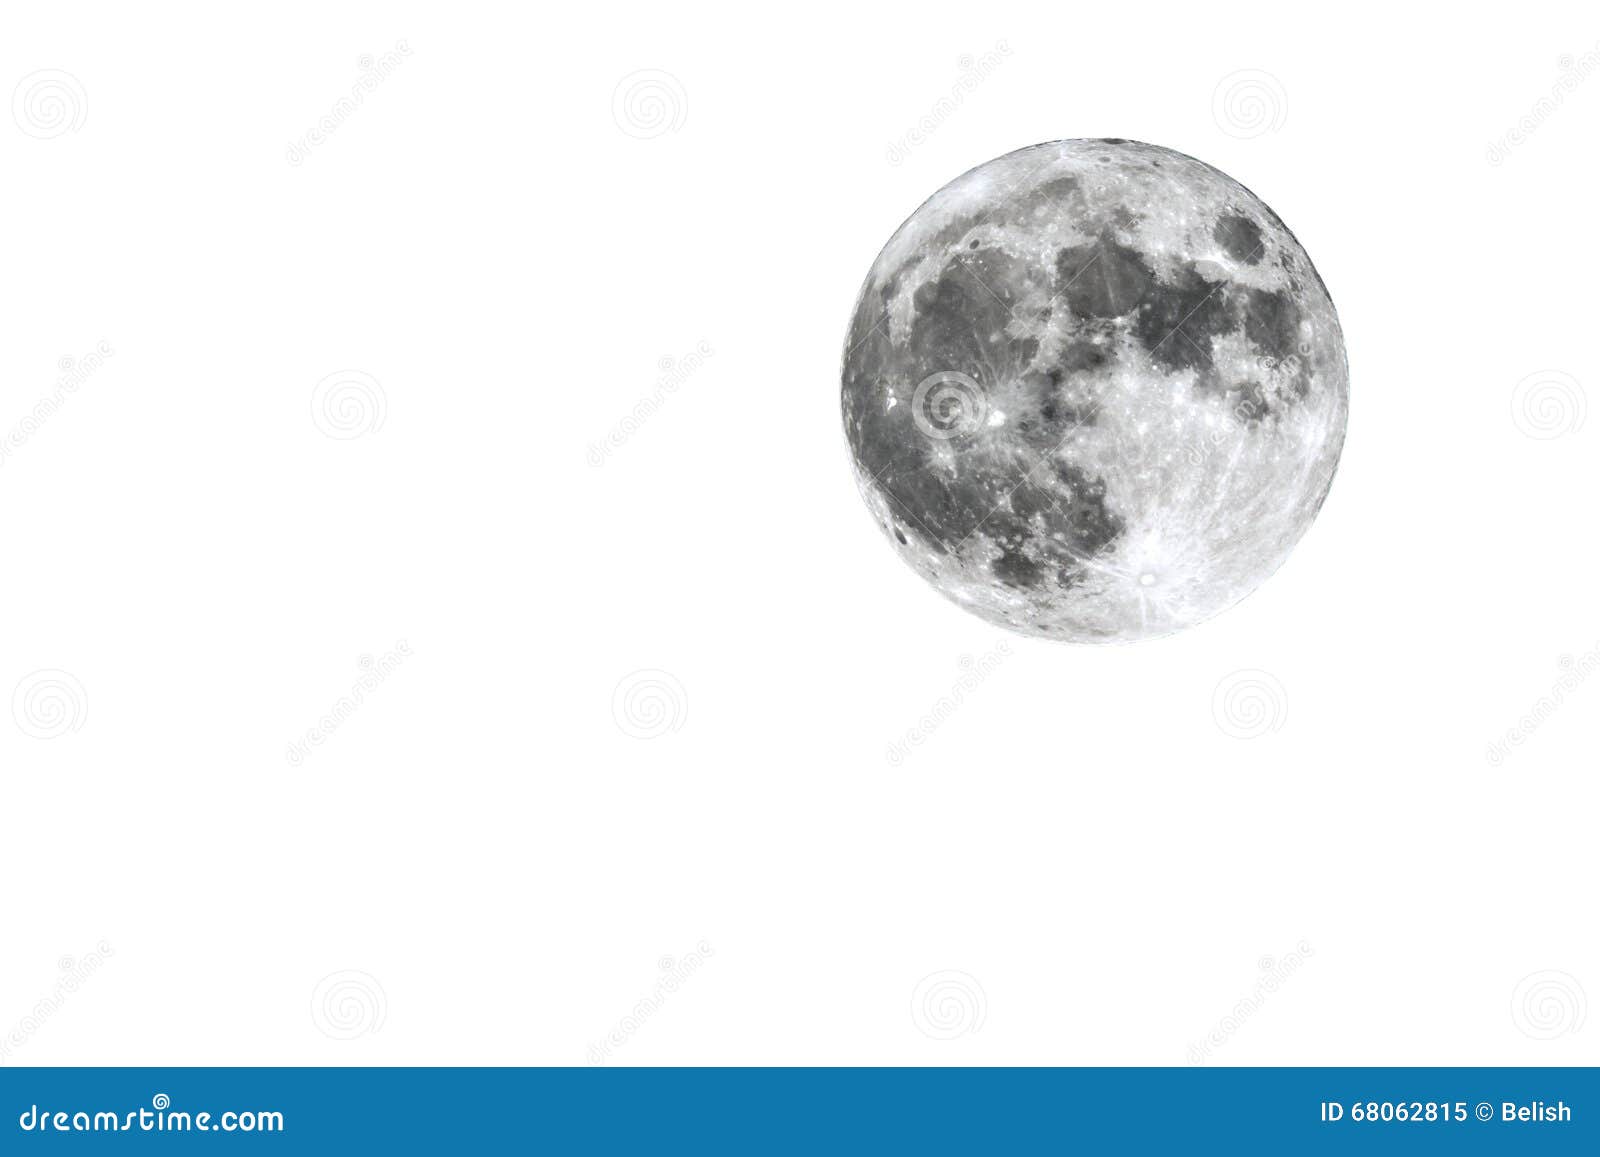 6723 Moon White Background Illustrations  Clip Art  iStock  Crescent  moon white background